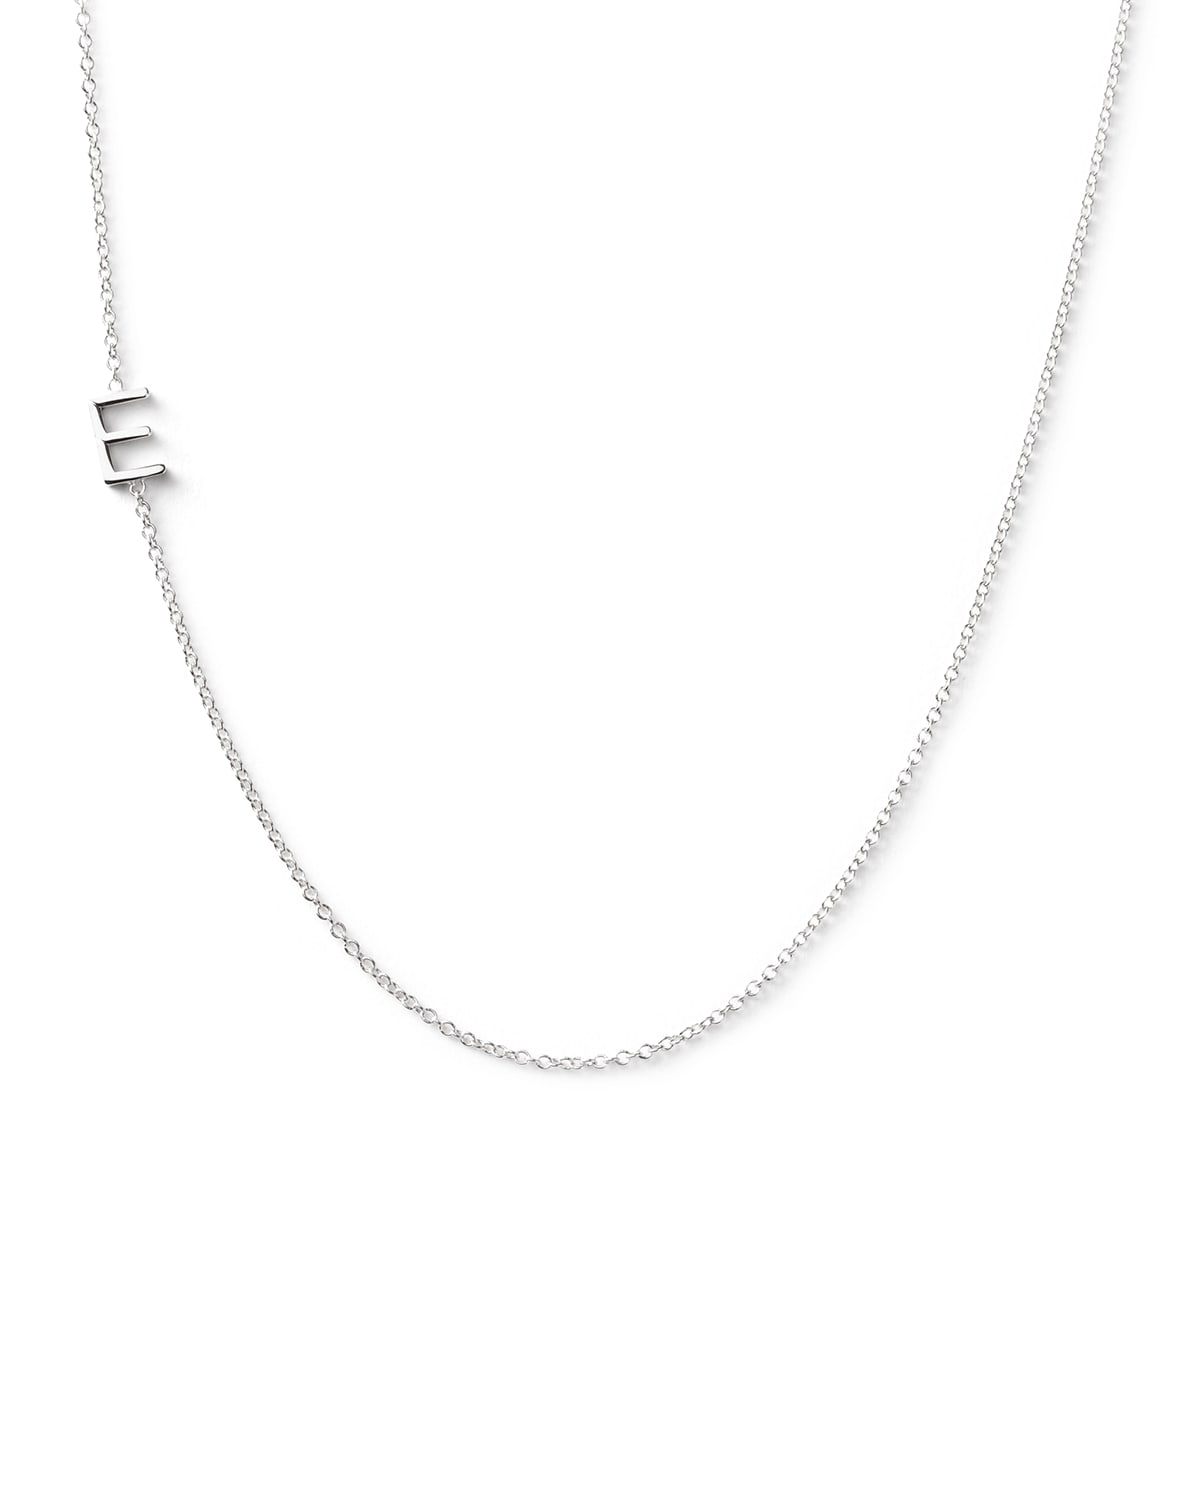 Maya Brenner Designs 14k White Gold Mini Letter Necklace In E